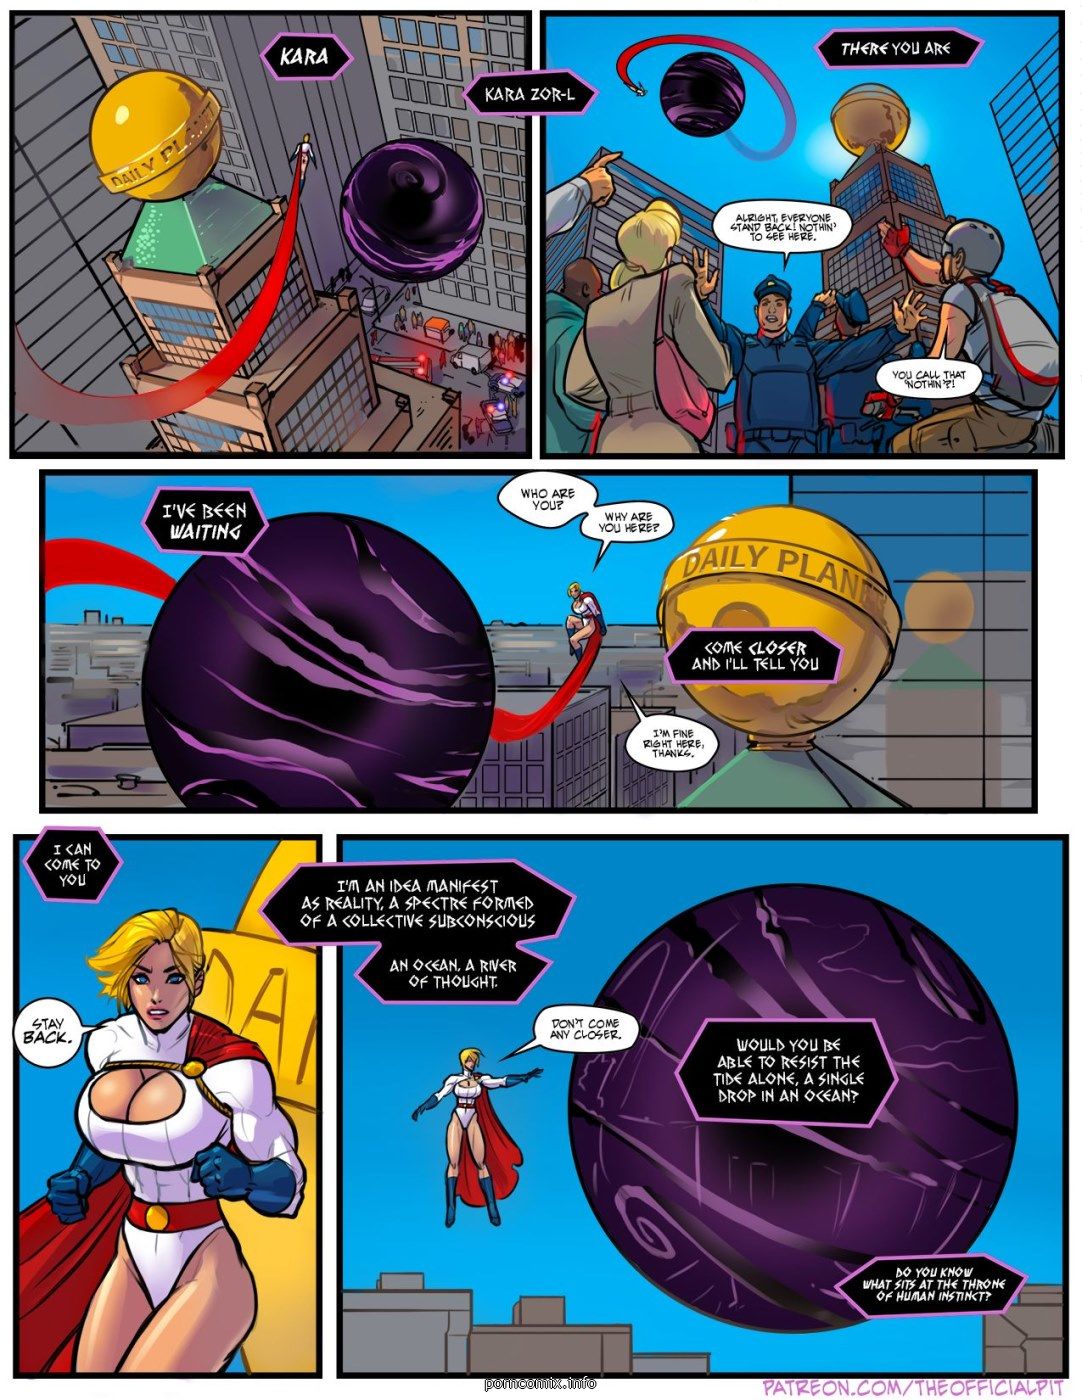 Power Girl vs Darkseid (Superman) page 1